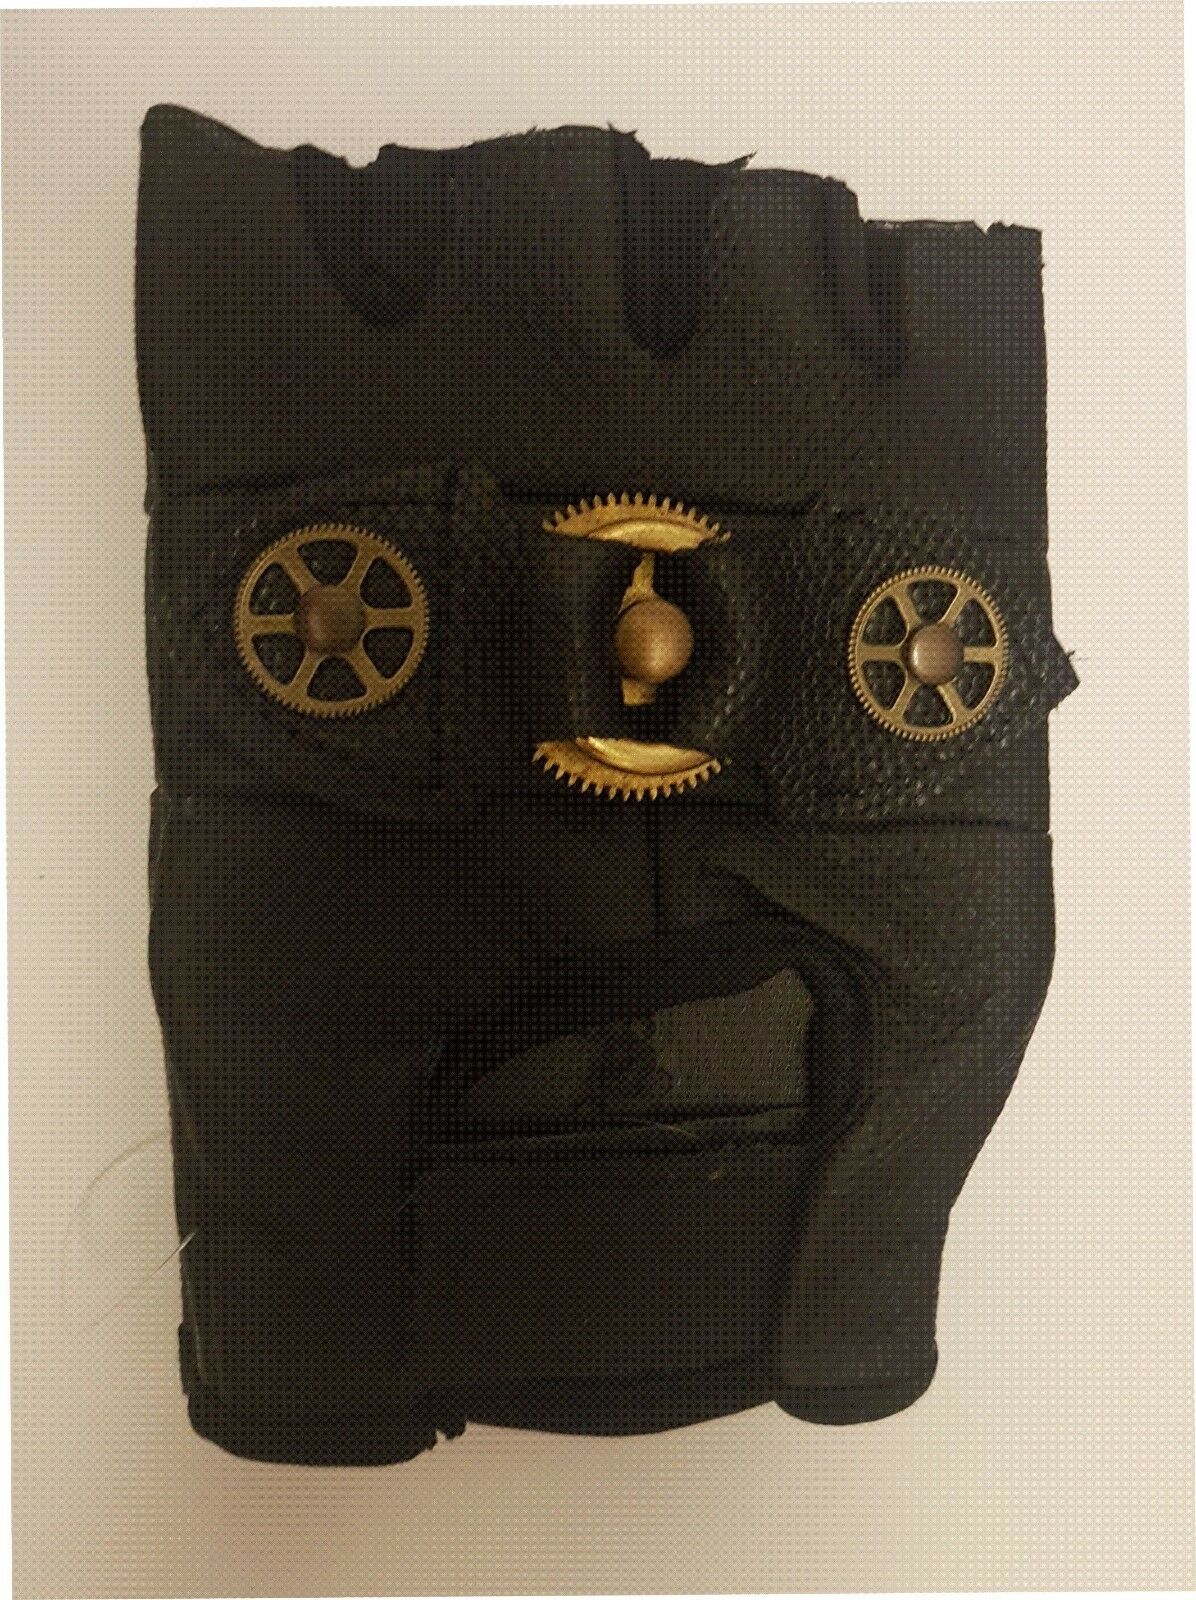 Real leather Unisex Fingerless Biker Gloves Driving Punk Steampunk Cogs